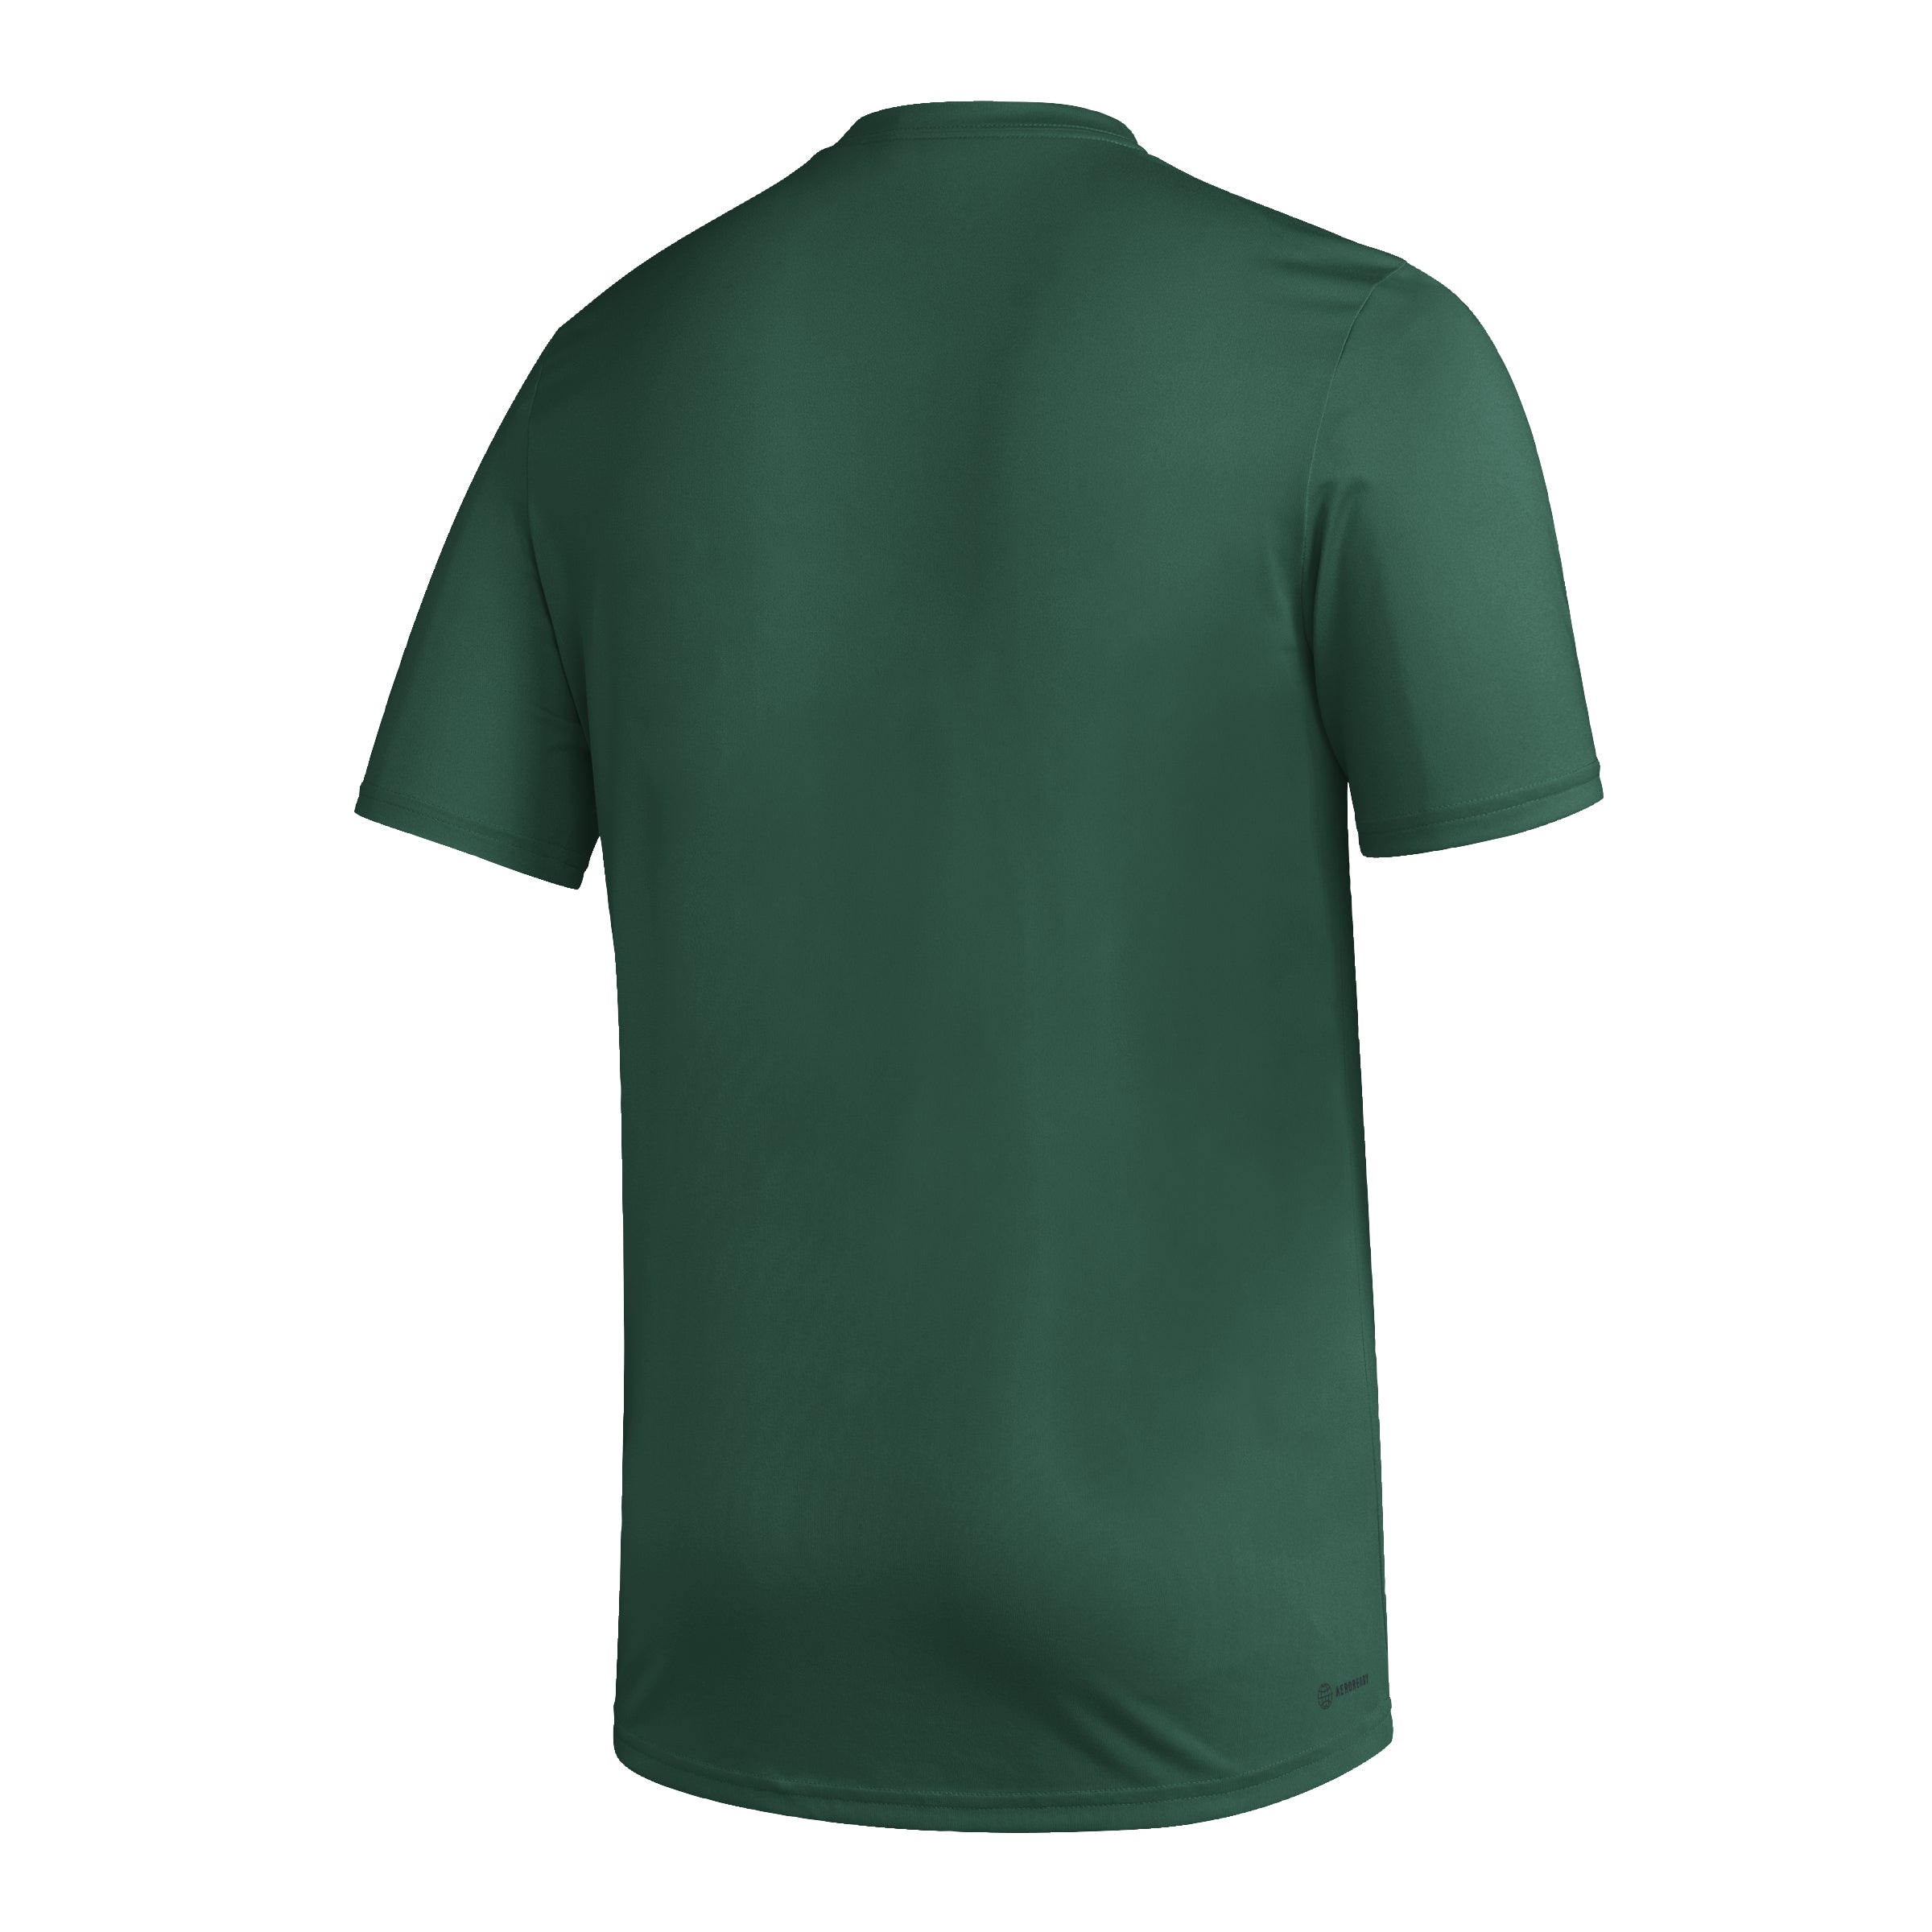 Miami Hurricanes 2023 adidas Aeroready Pregame Issued By T-Shirt - Green